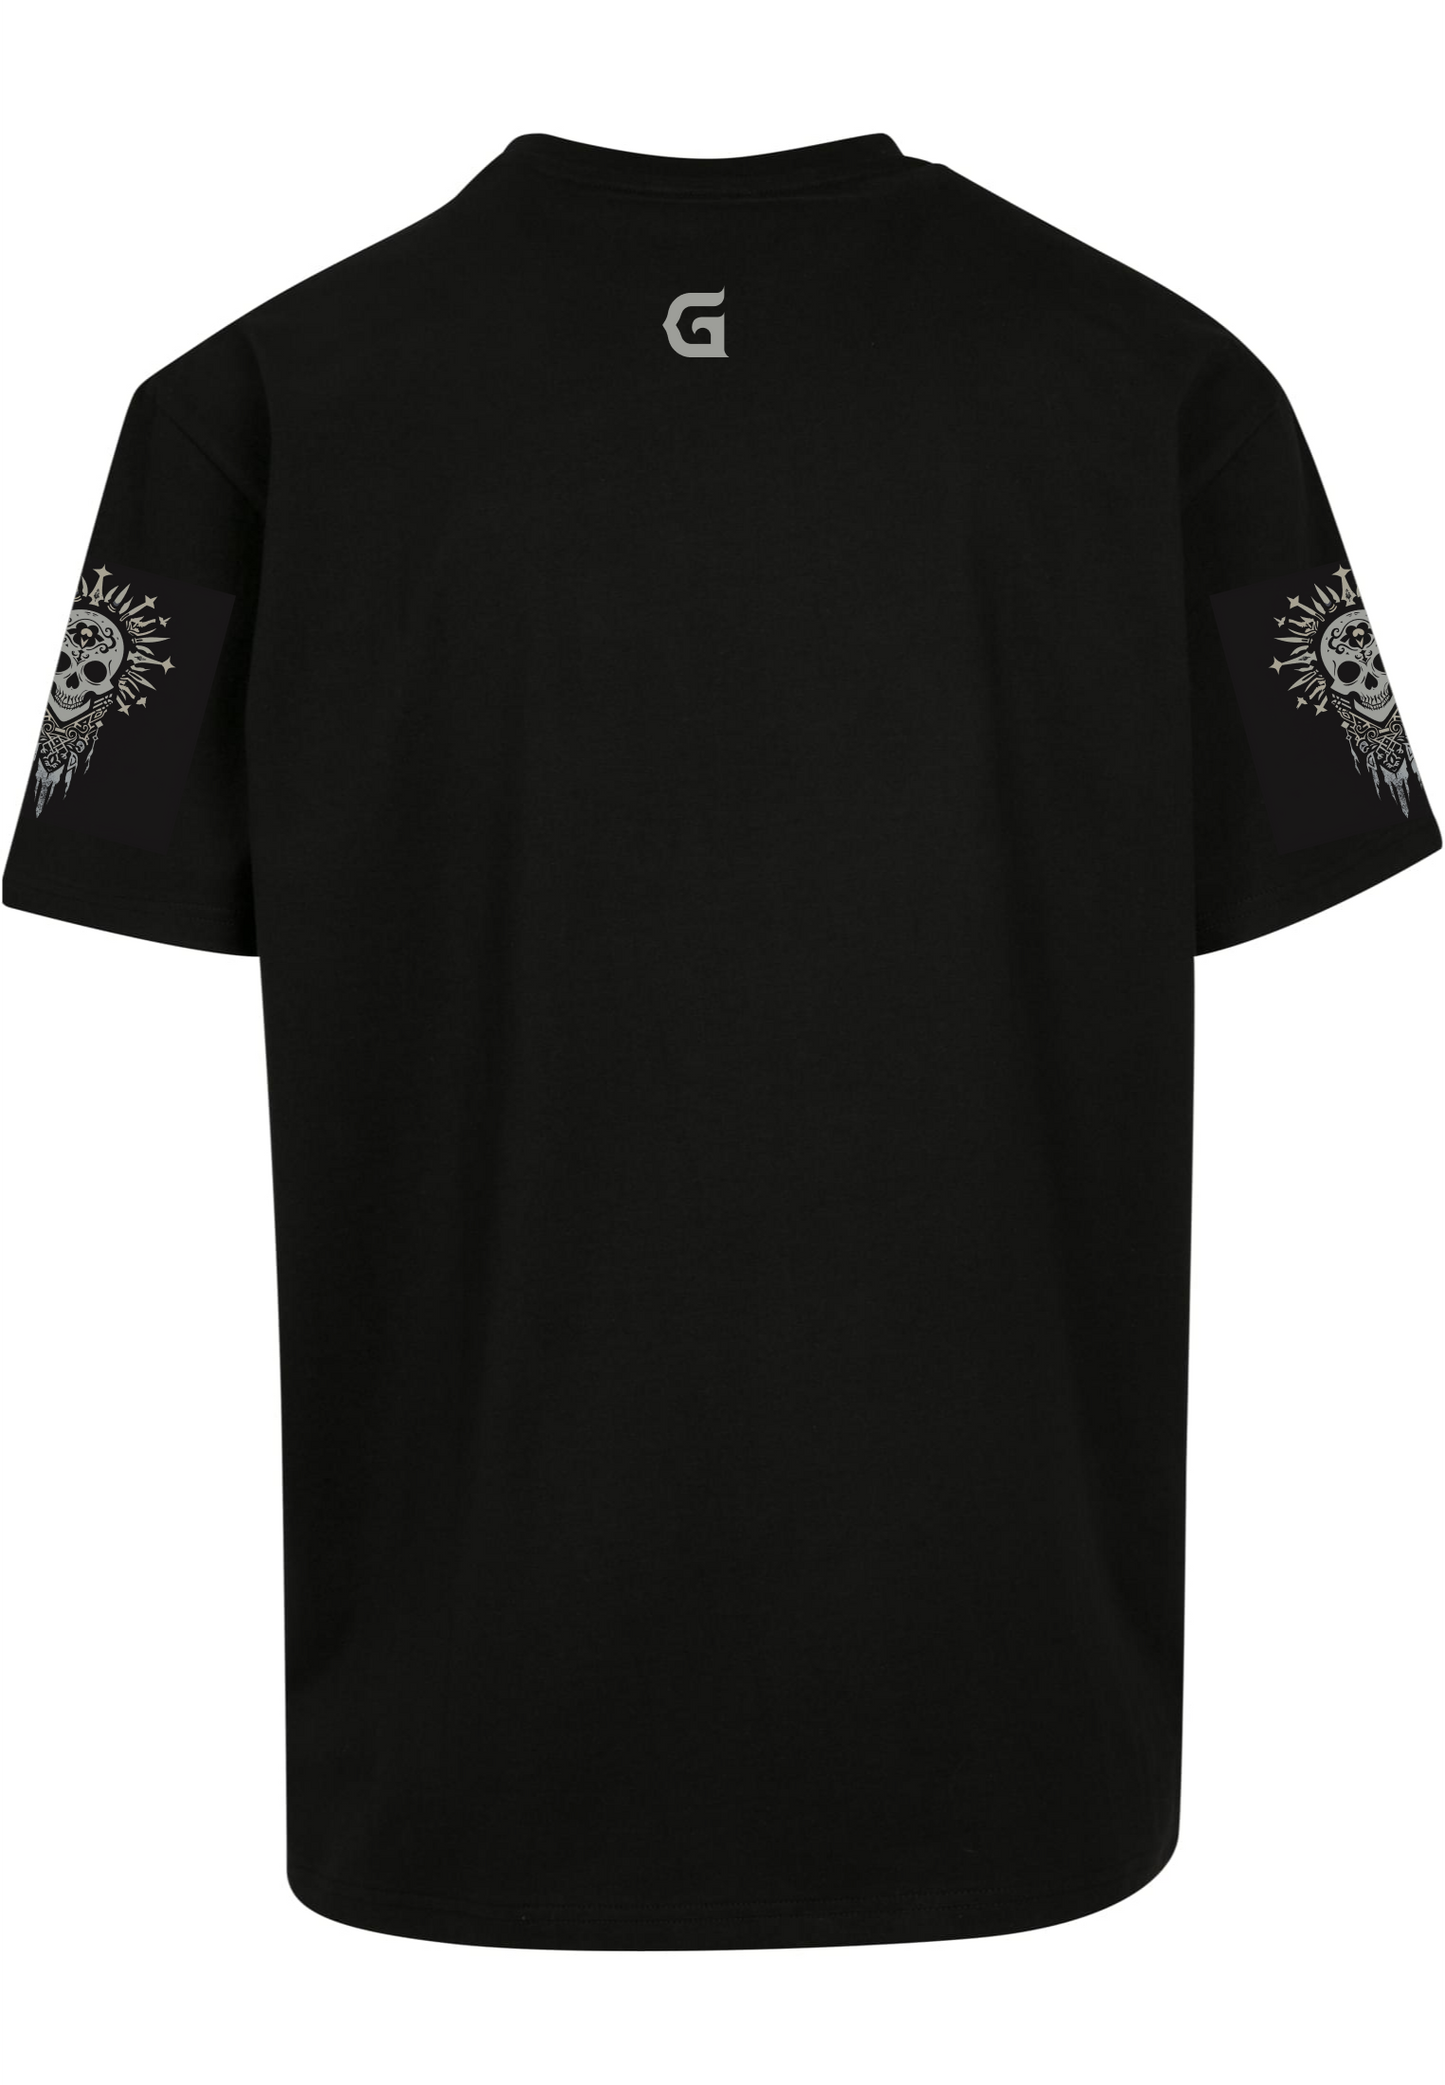 Folklore Mana t-shirt with ornament print - Black